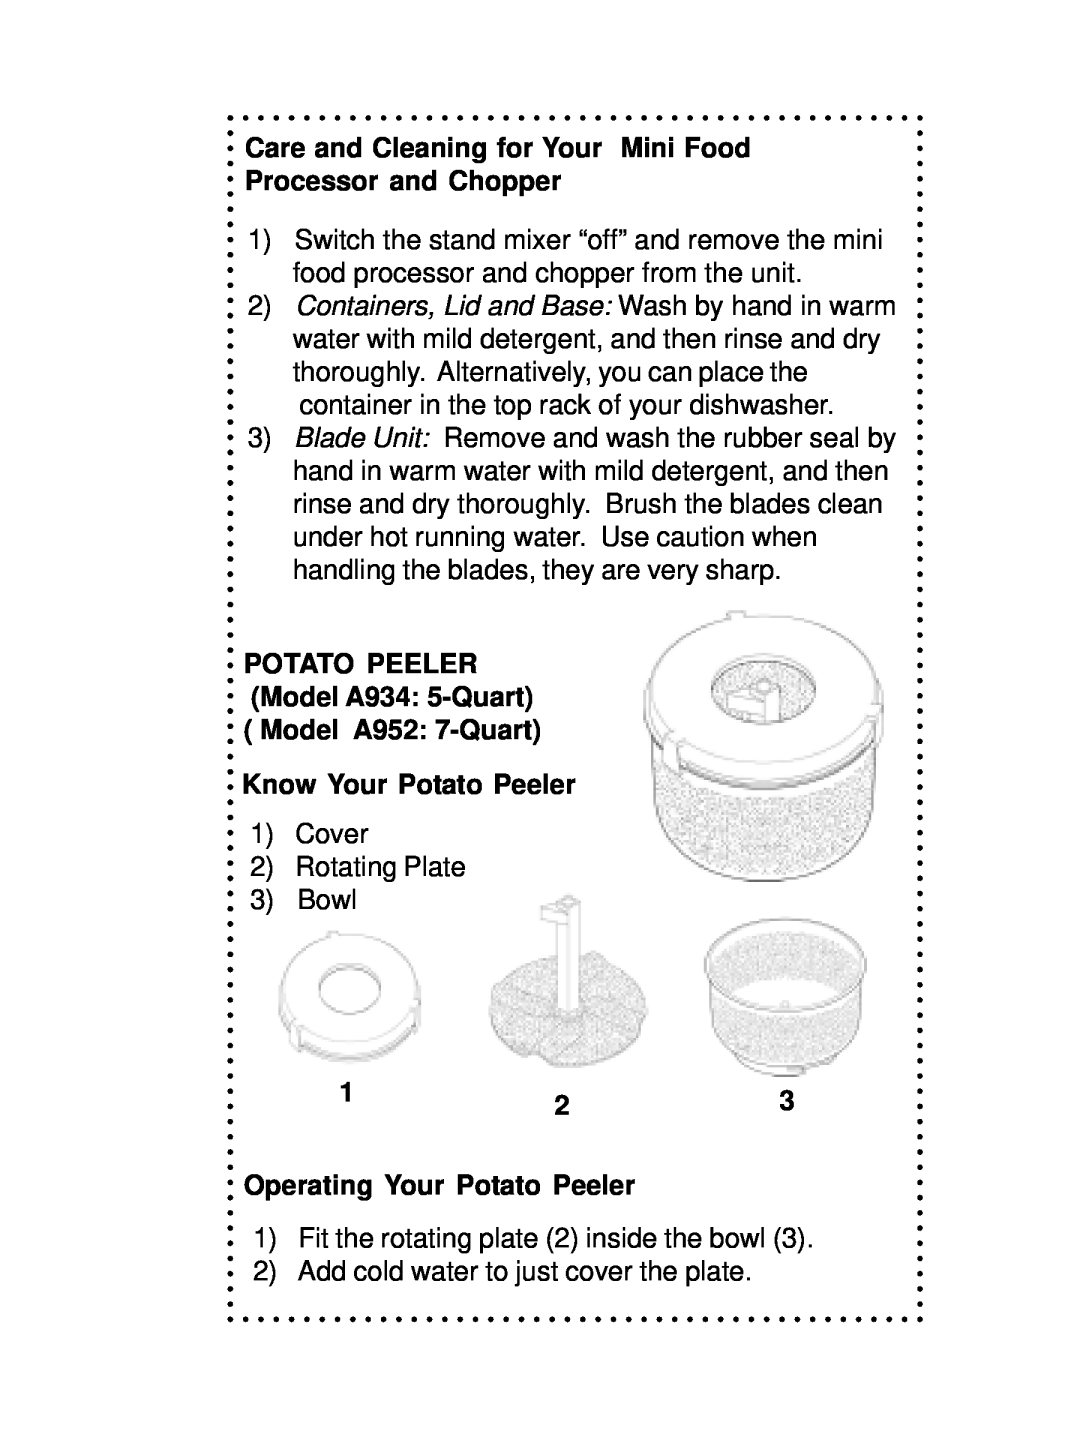 DeLonghi DSM700, DSM800 instruction manual POTATO PEELER Model A934: 5-Quart, Model A952: 7-Quart Know Your Potato Peeler 